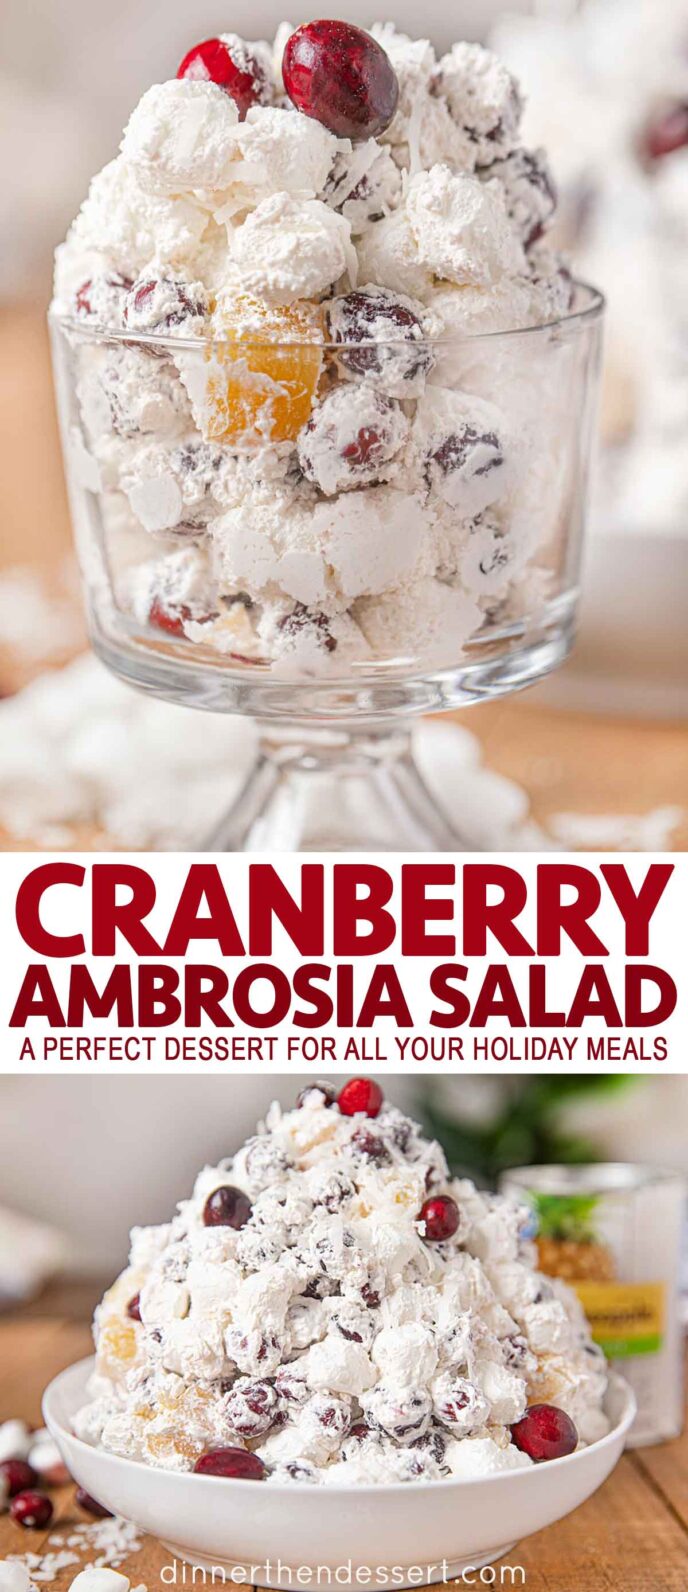 Ambrosia Salad with Cranberries